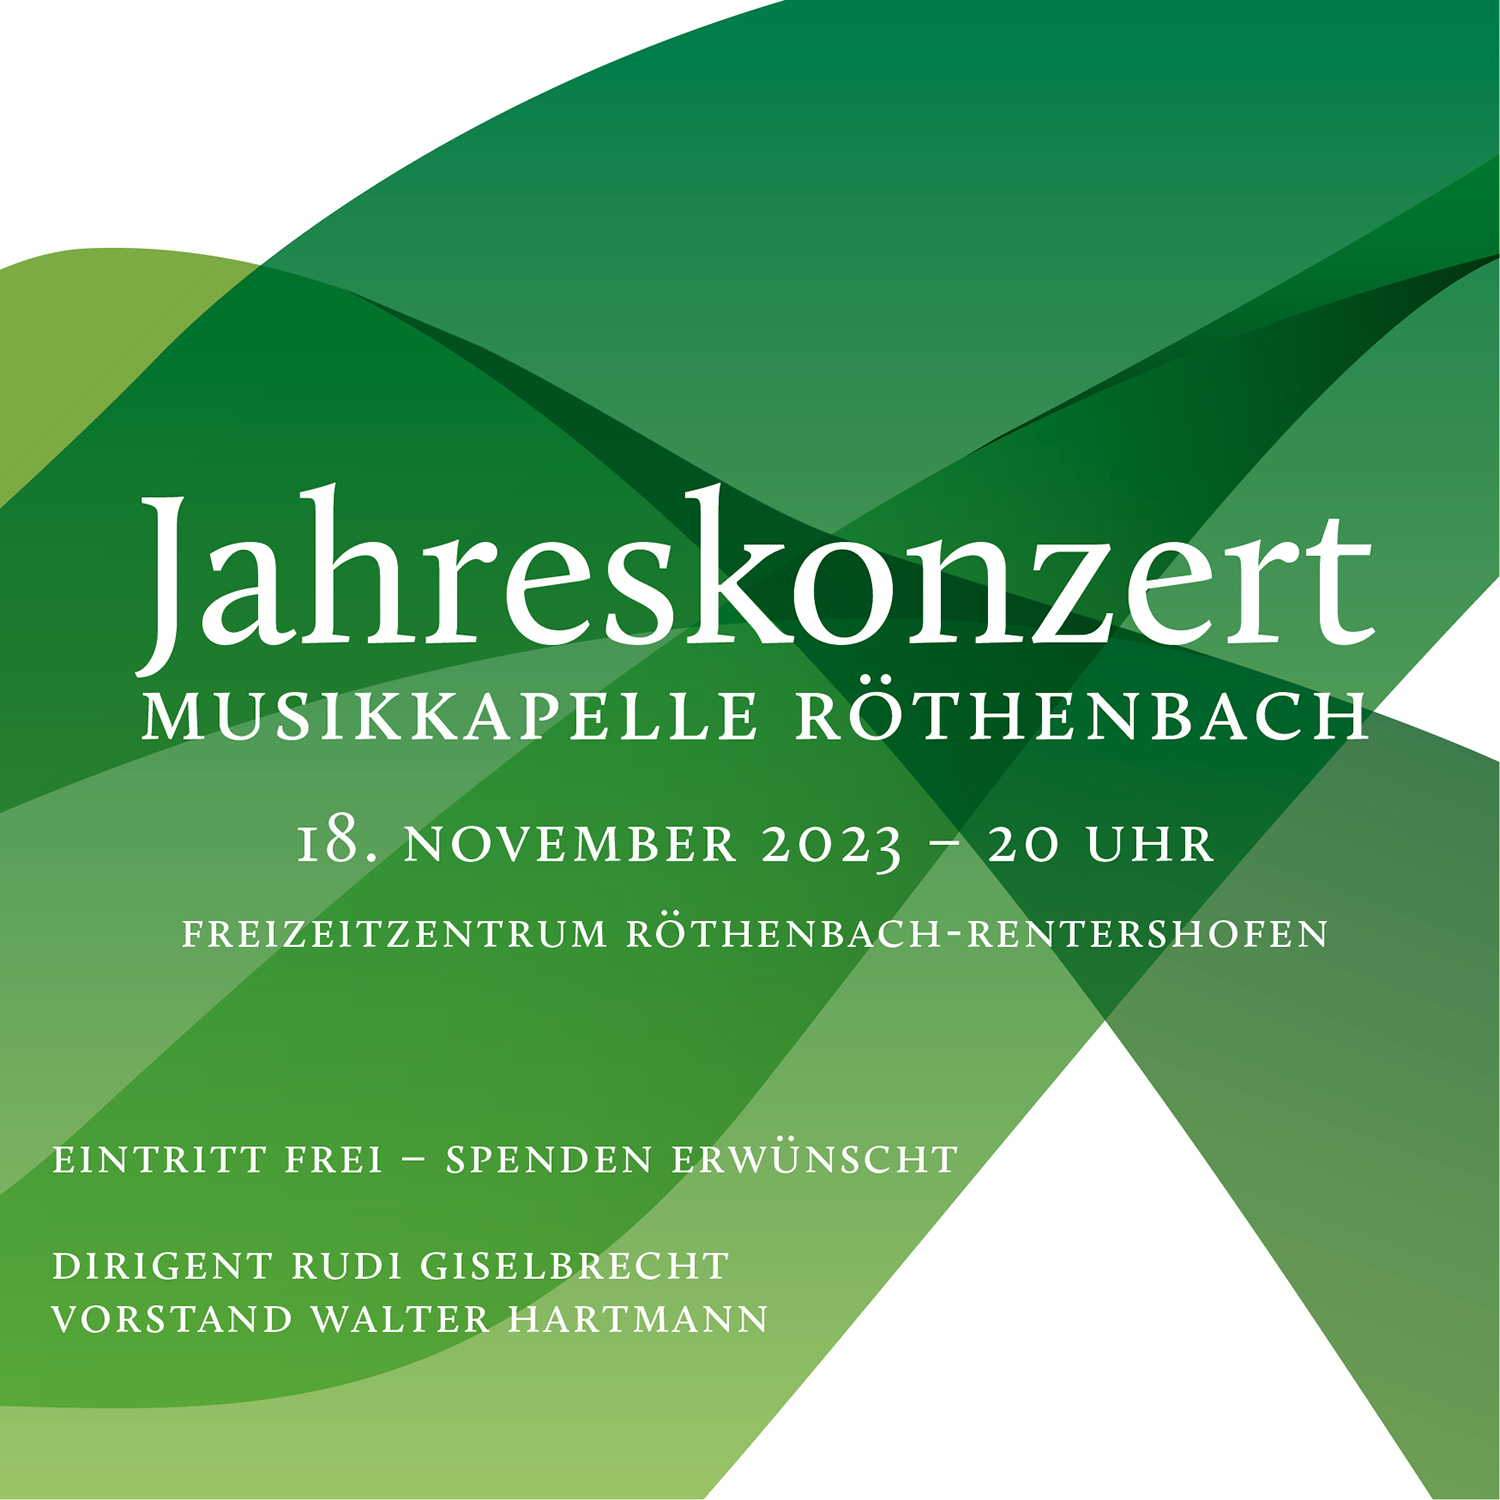 Jahreskonzert 2023 der Musikkapelle Röthenbach